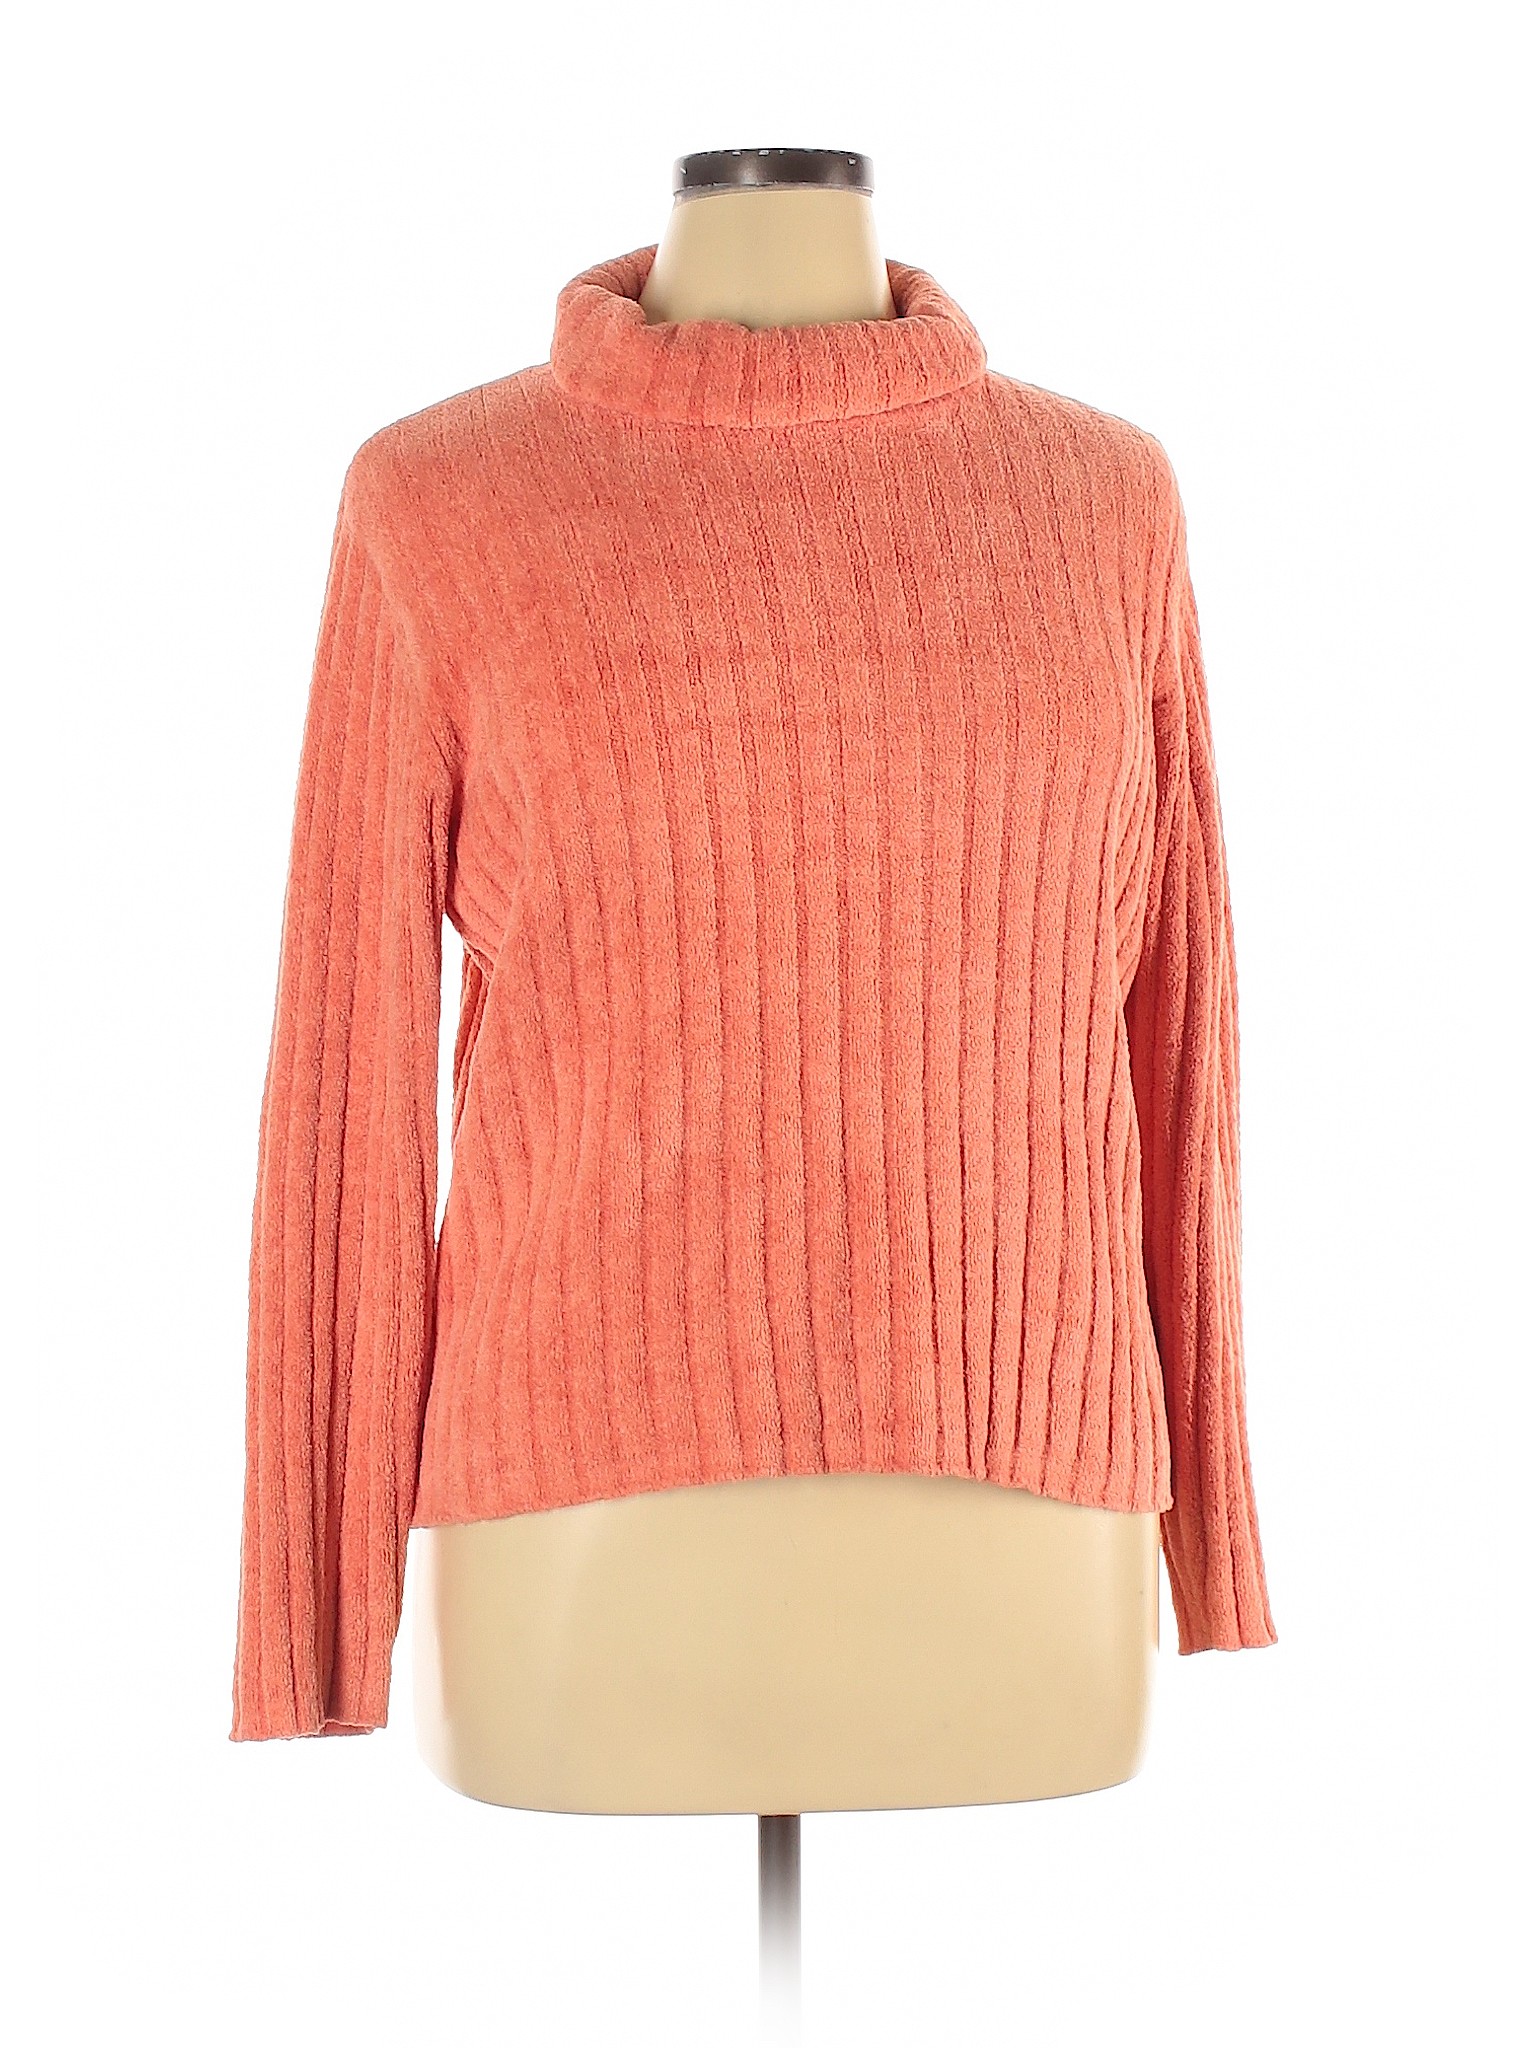 J.Jill Women Pink Pullover Sweater L | eBay